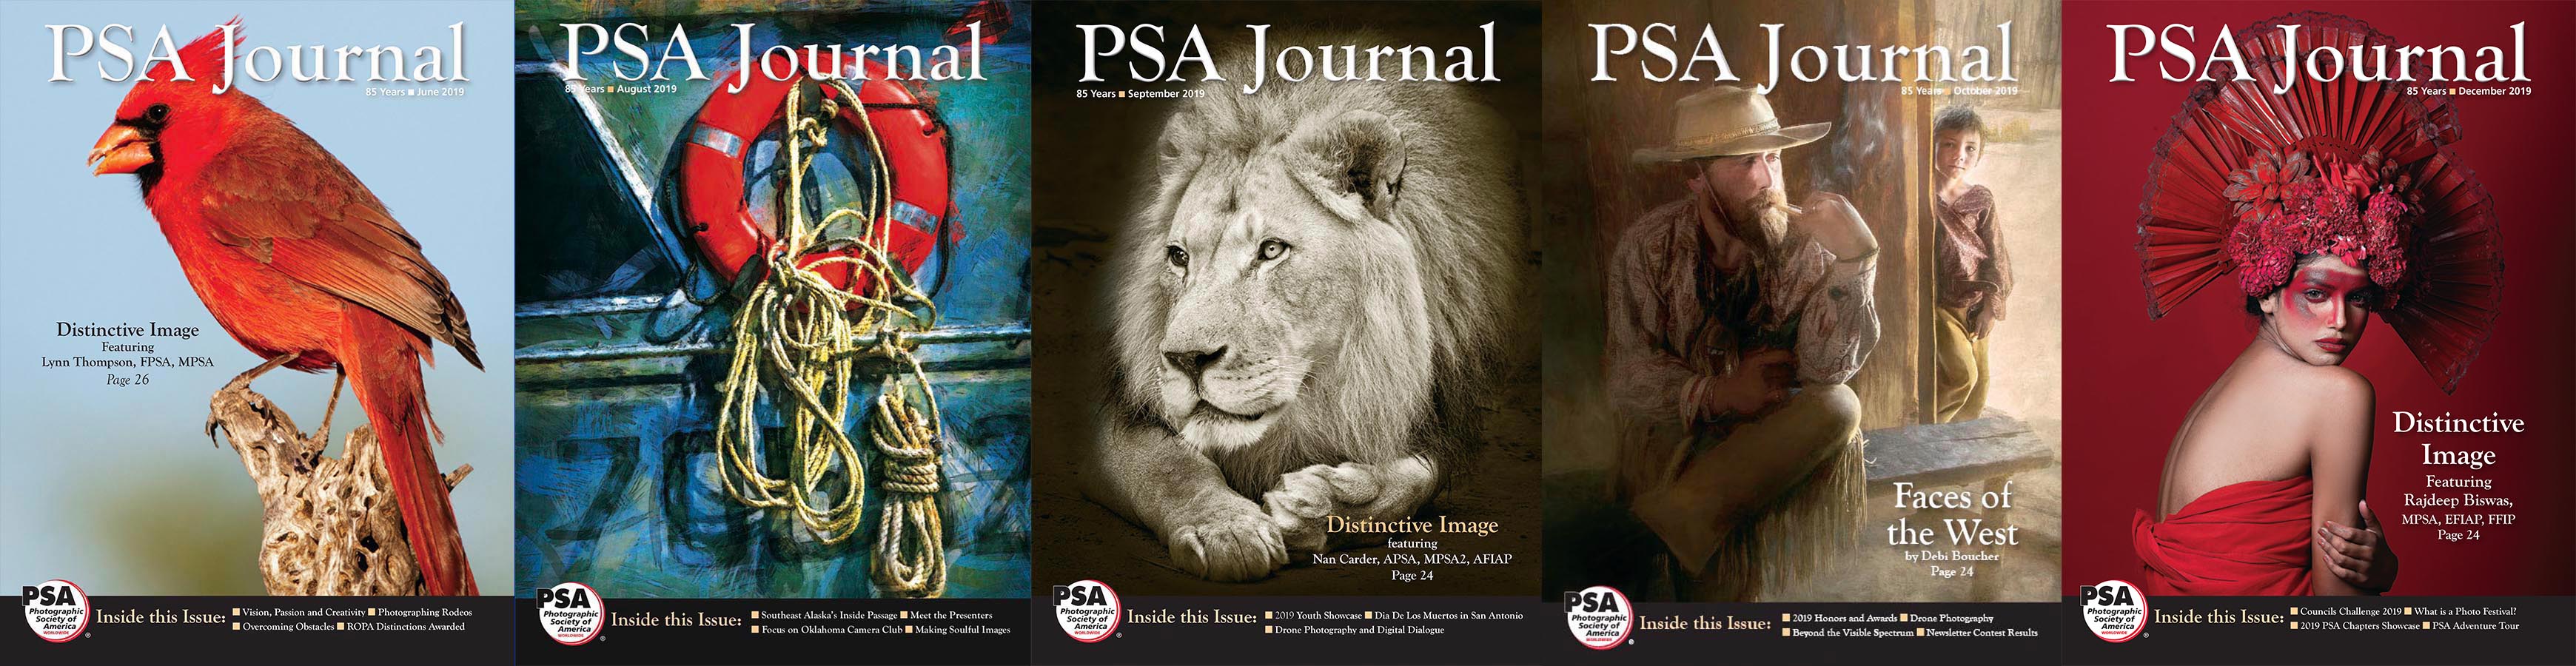 PSA Journal